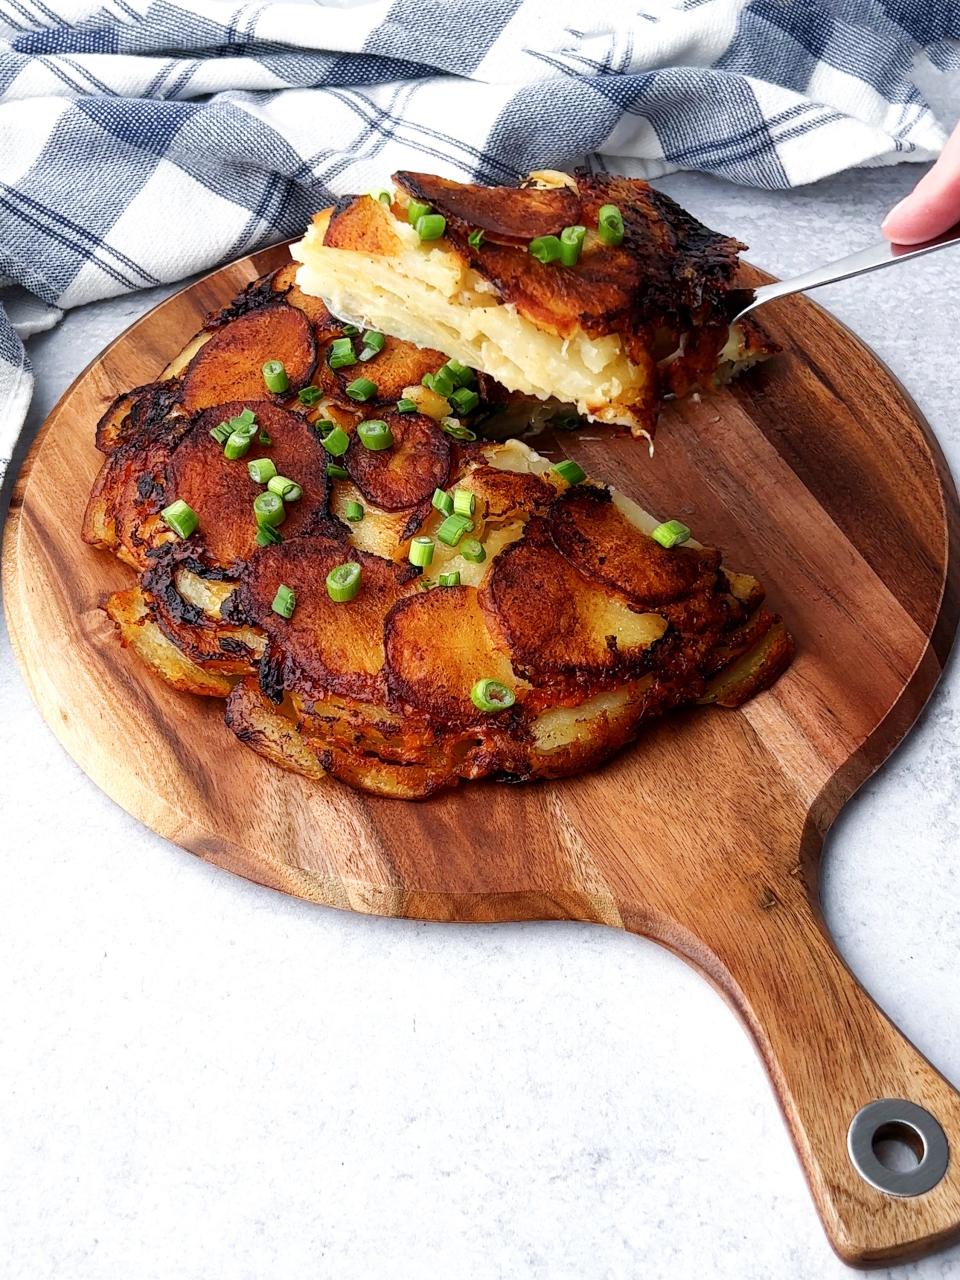 Irish Pan Haggerty layers potatoes, onions, butter, cheese into a crispy baked dish.